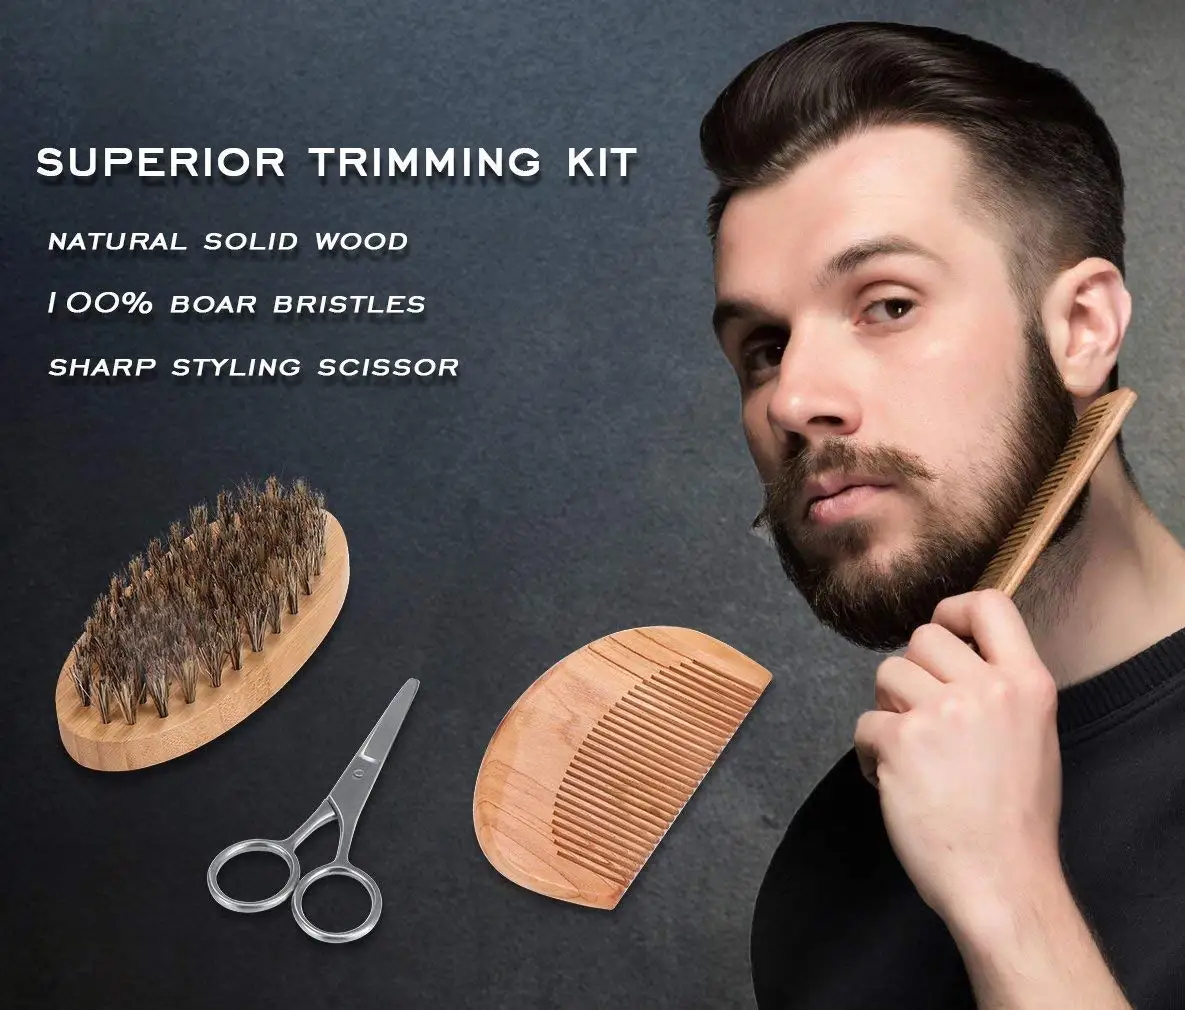 Isner Mile Beard Kit for Men/Grooming & Trimming Tool Complete Set Sweet Orange